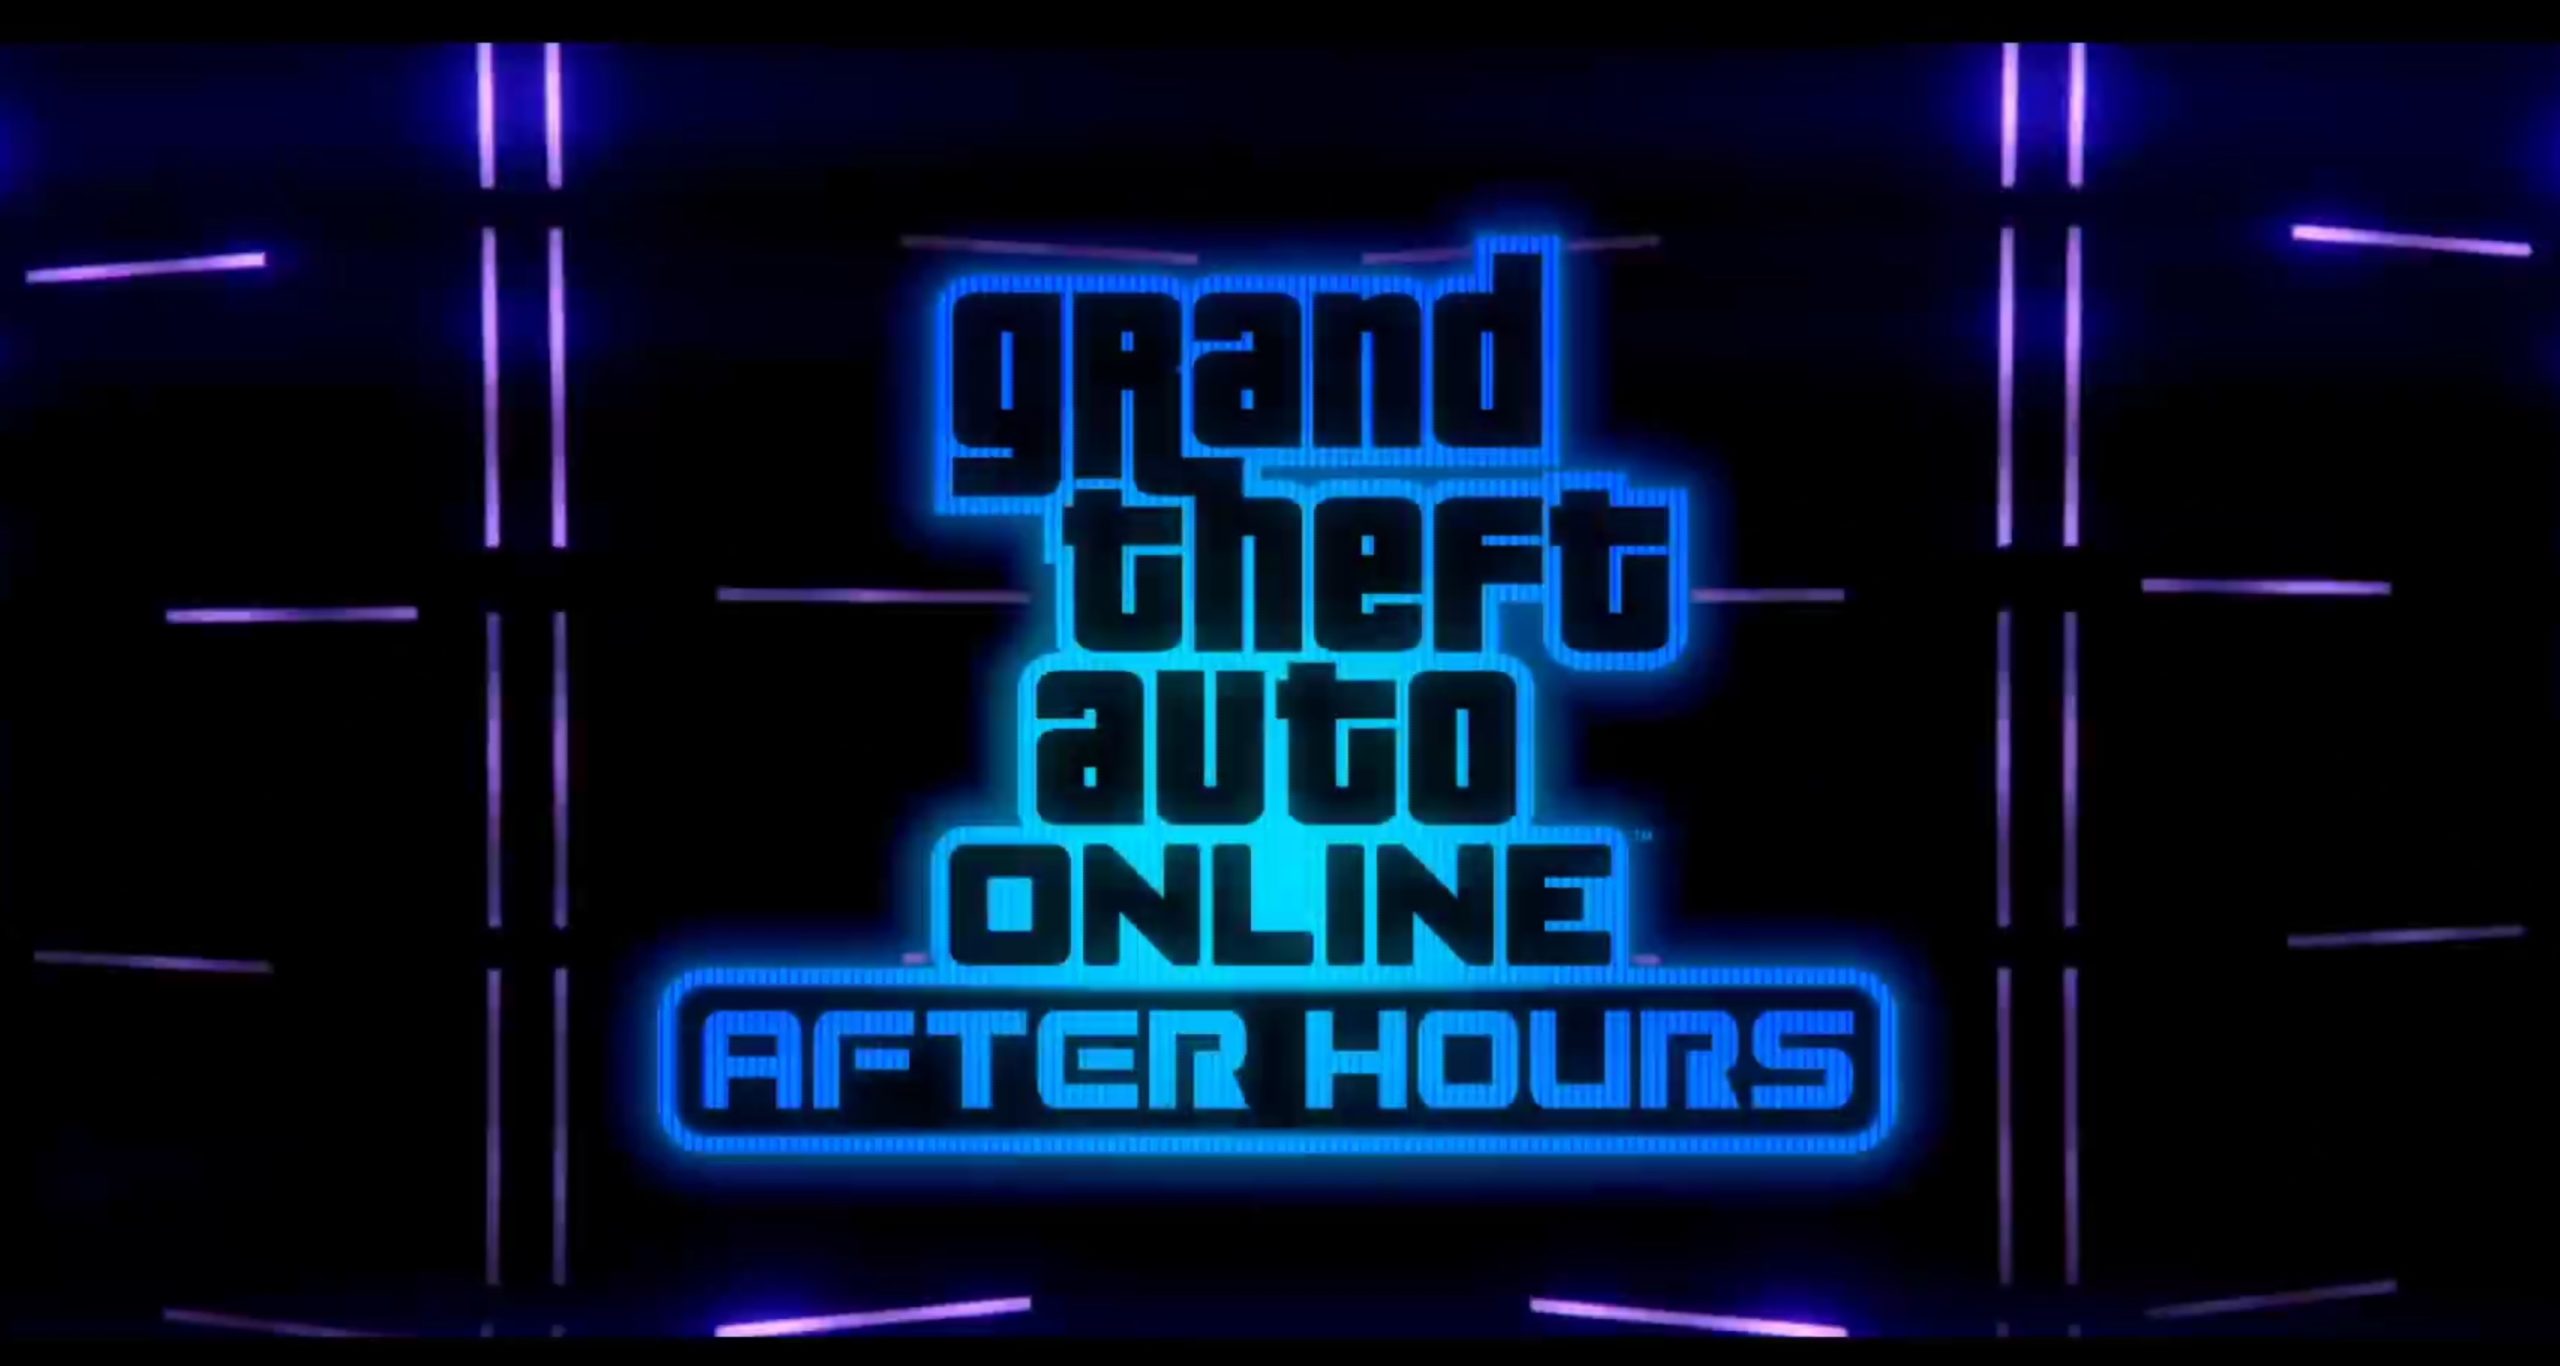 GTA Online Nightlife-Themed Update ‘After Hours’ Goes Live Next Week